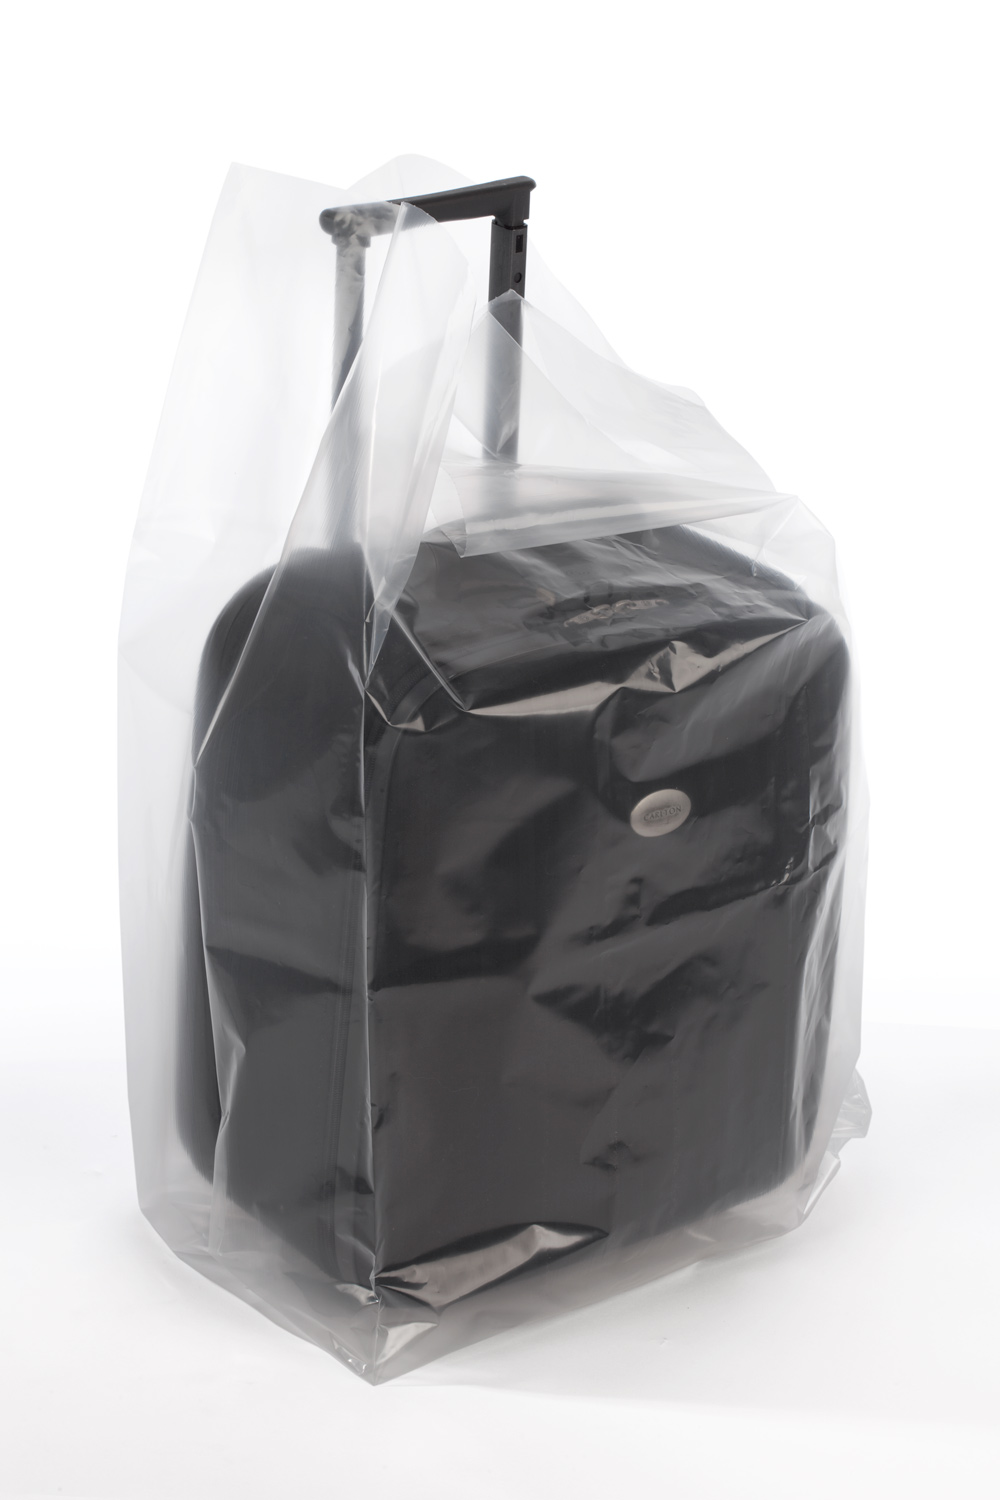 3 MIL Layflat Poly Bags